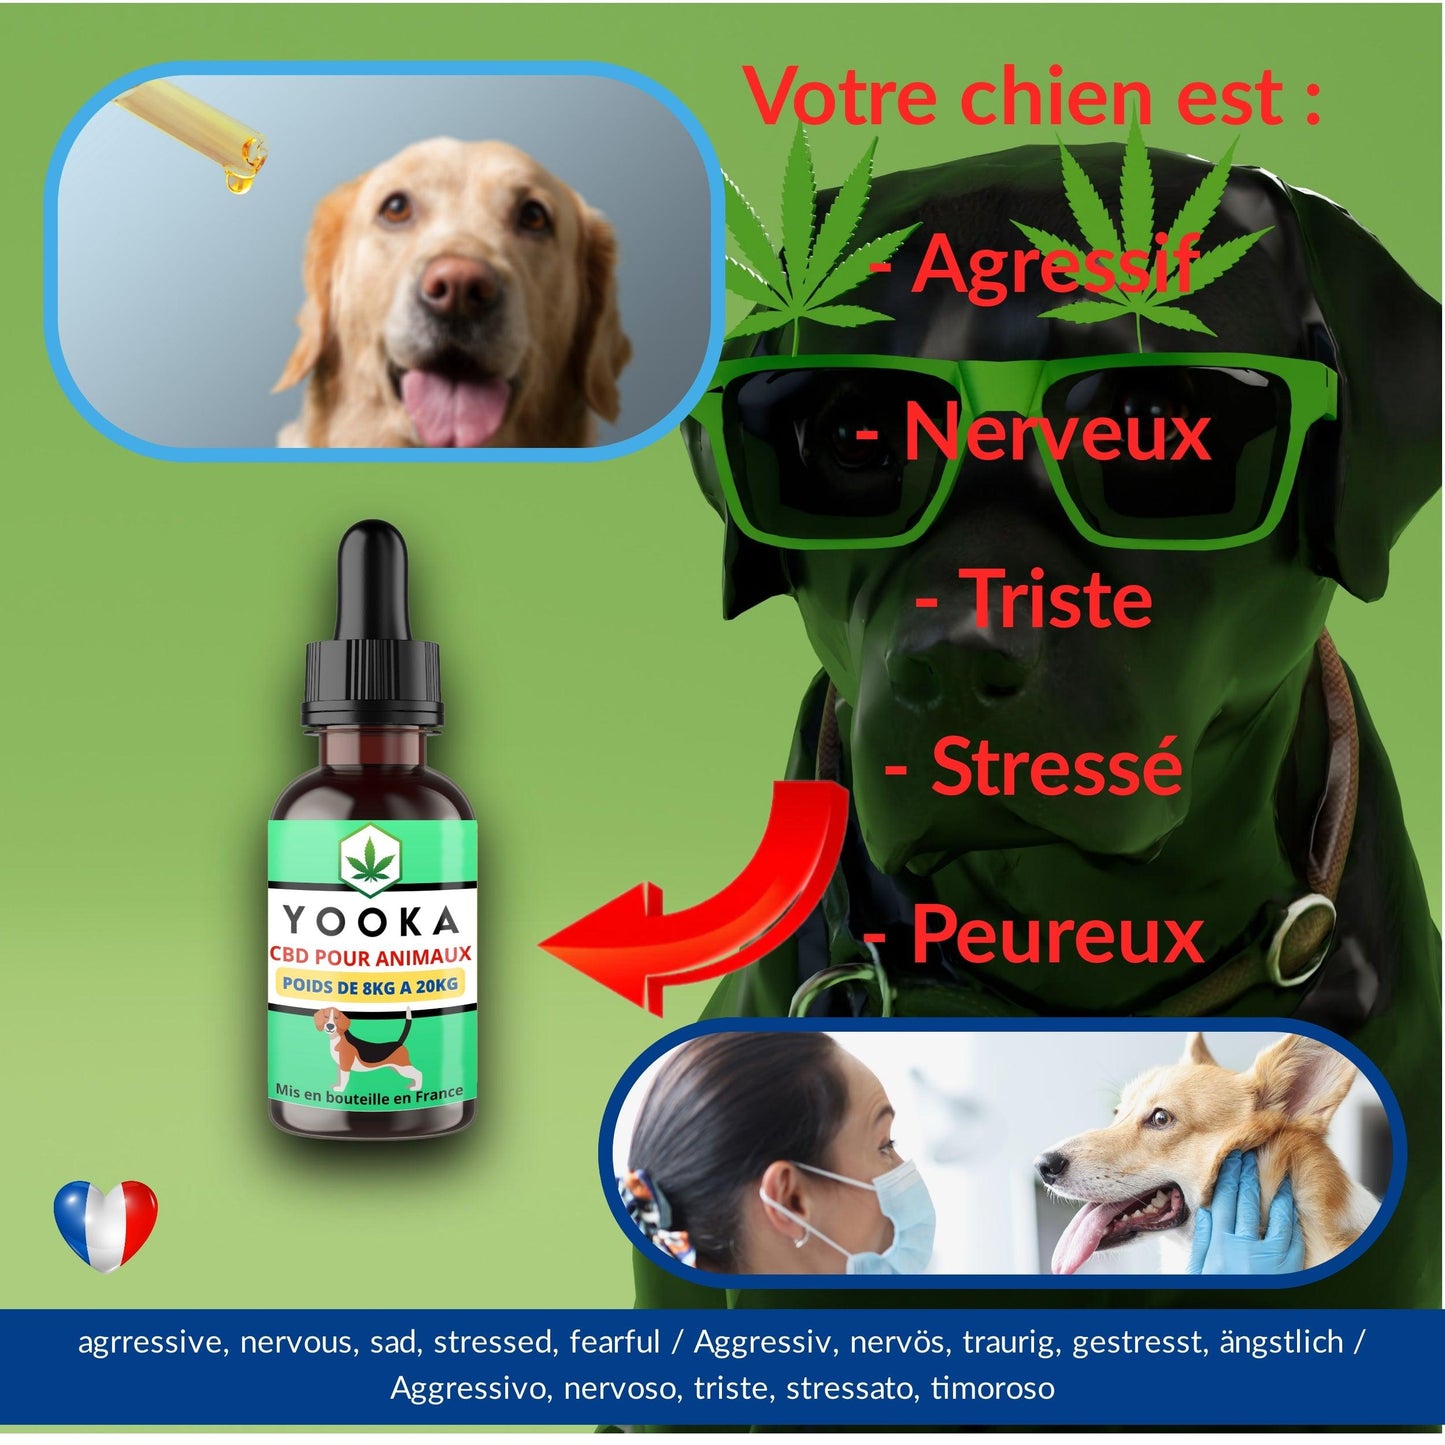 yooka_yookacbd.com_huile_cbd_mct_bio_france_gamme_français_pas_cher_animaux_chien_stress_chat_lapin_omega_anxiete_vegan_bacon_peureux